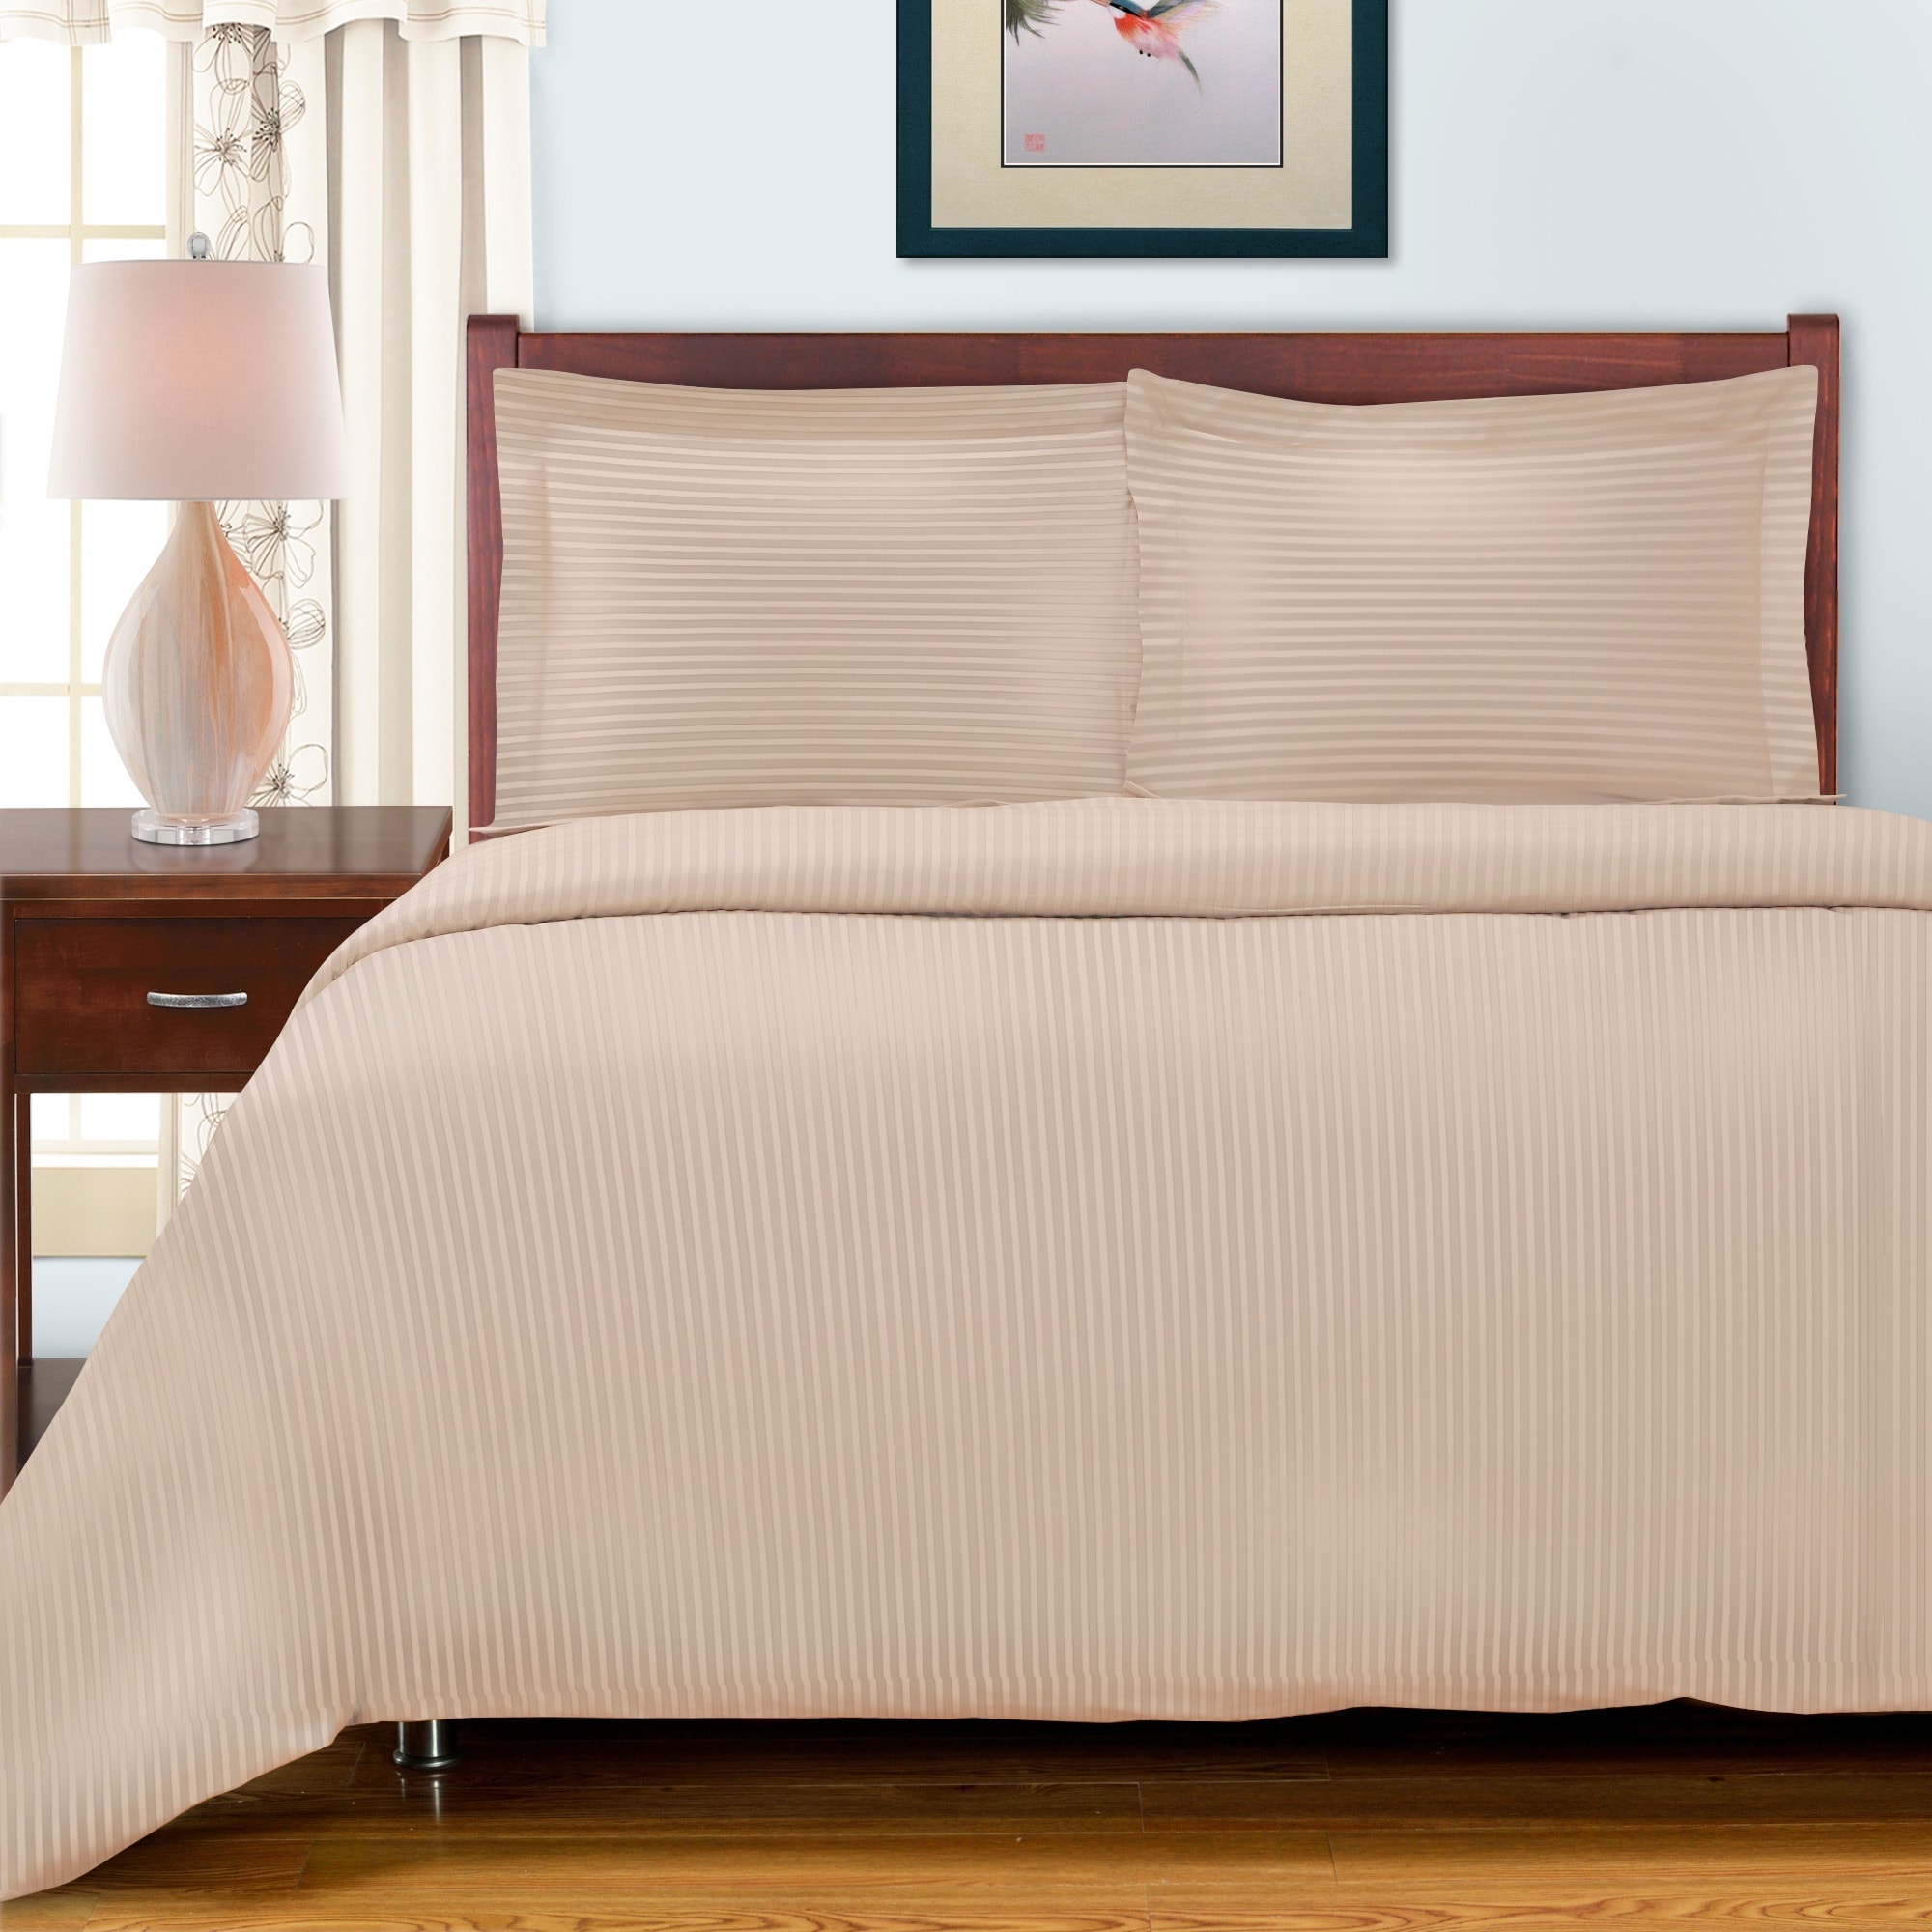 300 Count Luxury Stripe Sateen Bedding Duvet Cover Egyptian Cotton Bed Linen 